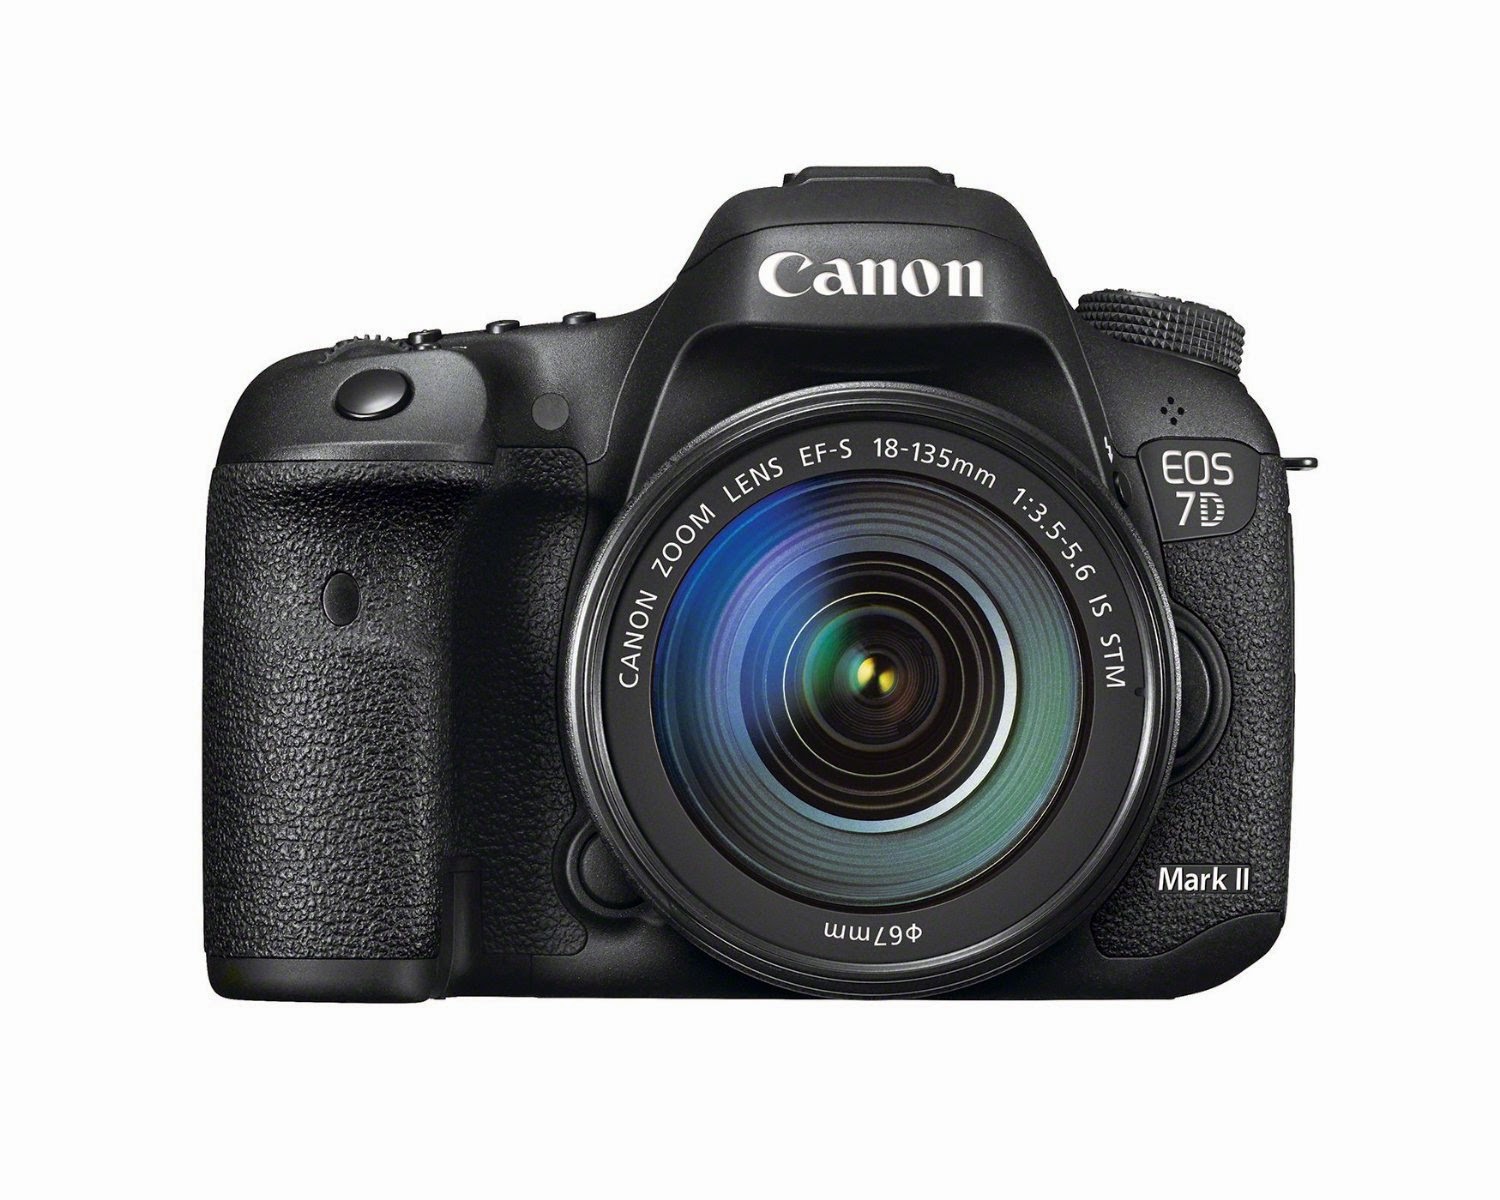 Home Garden And More Canon Eos 7d Mark Ii Digital Slr Camera Review